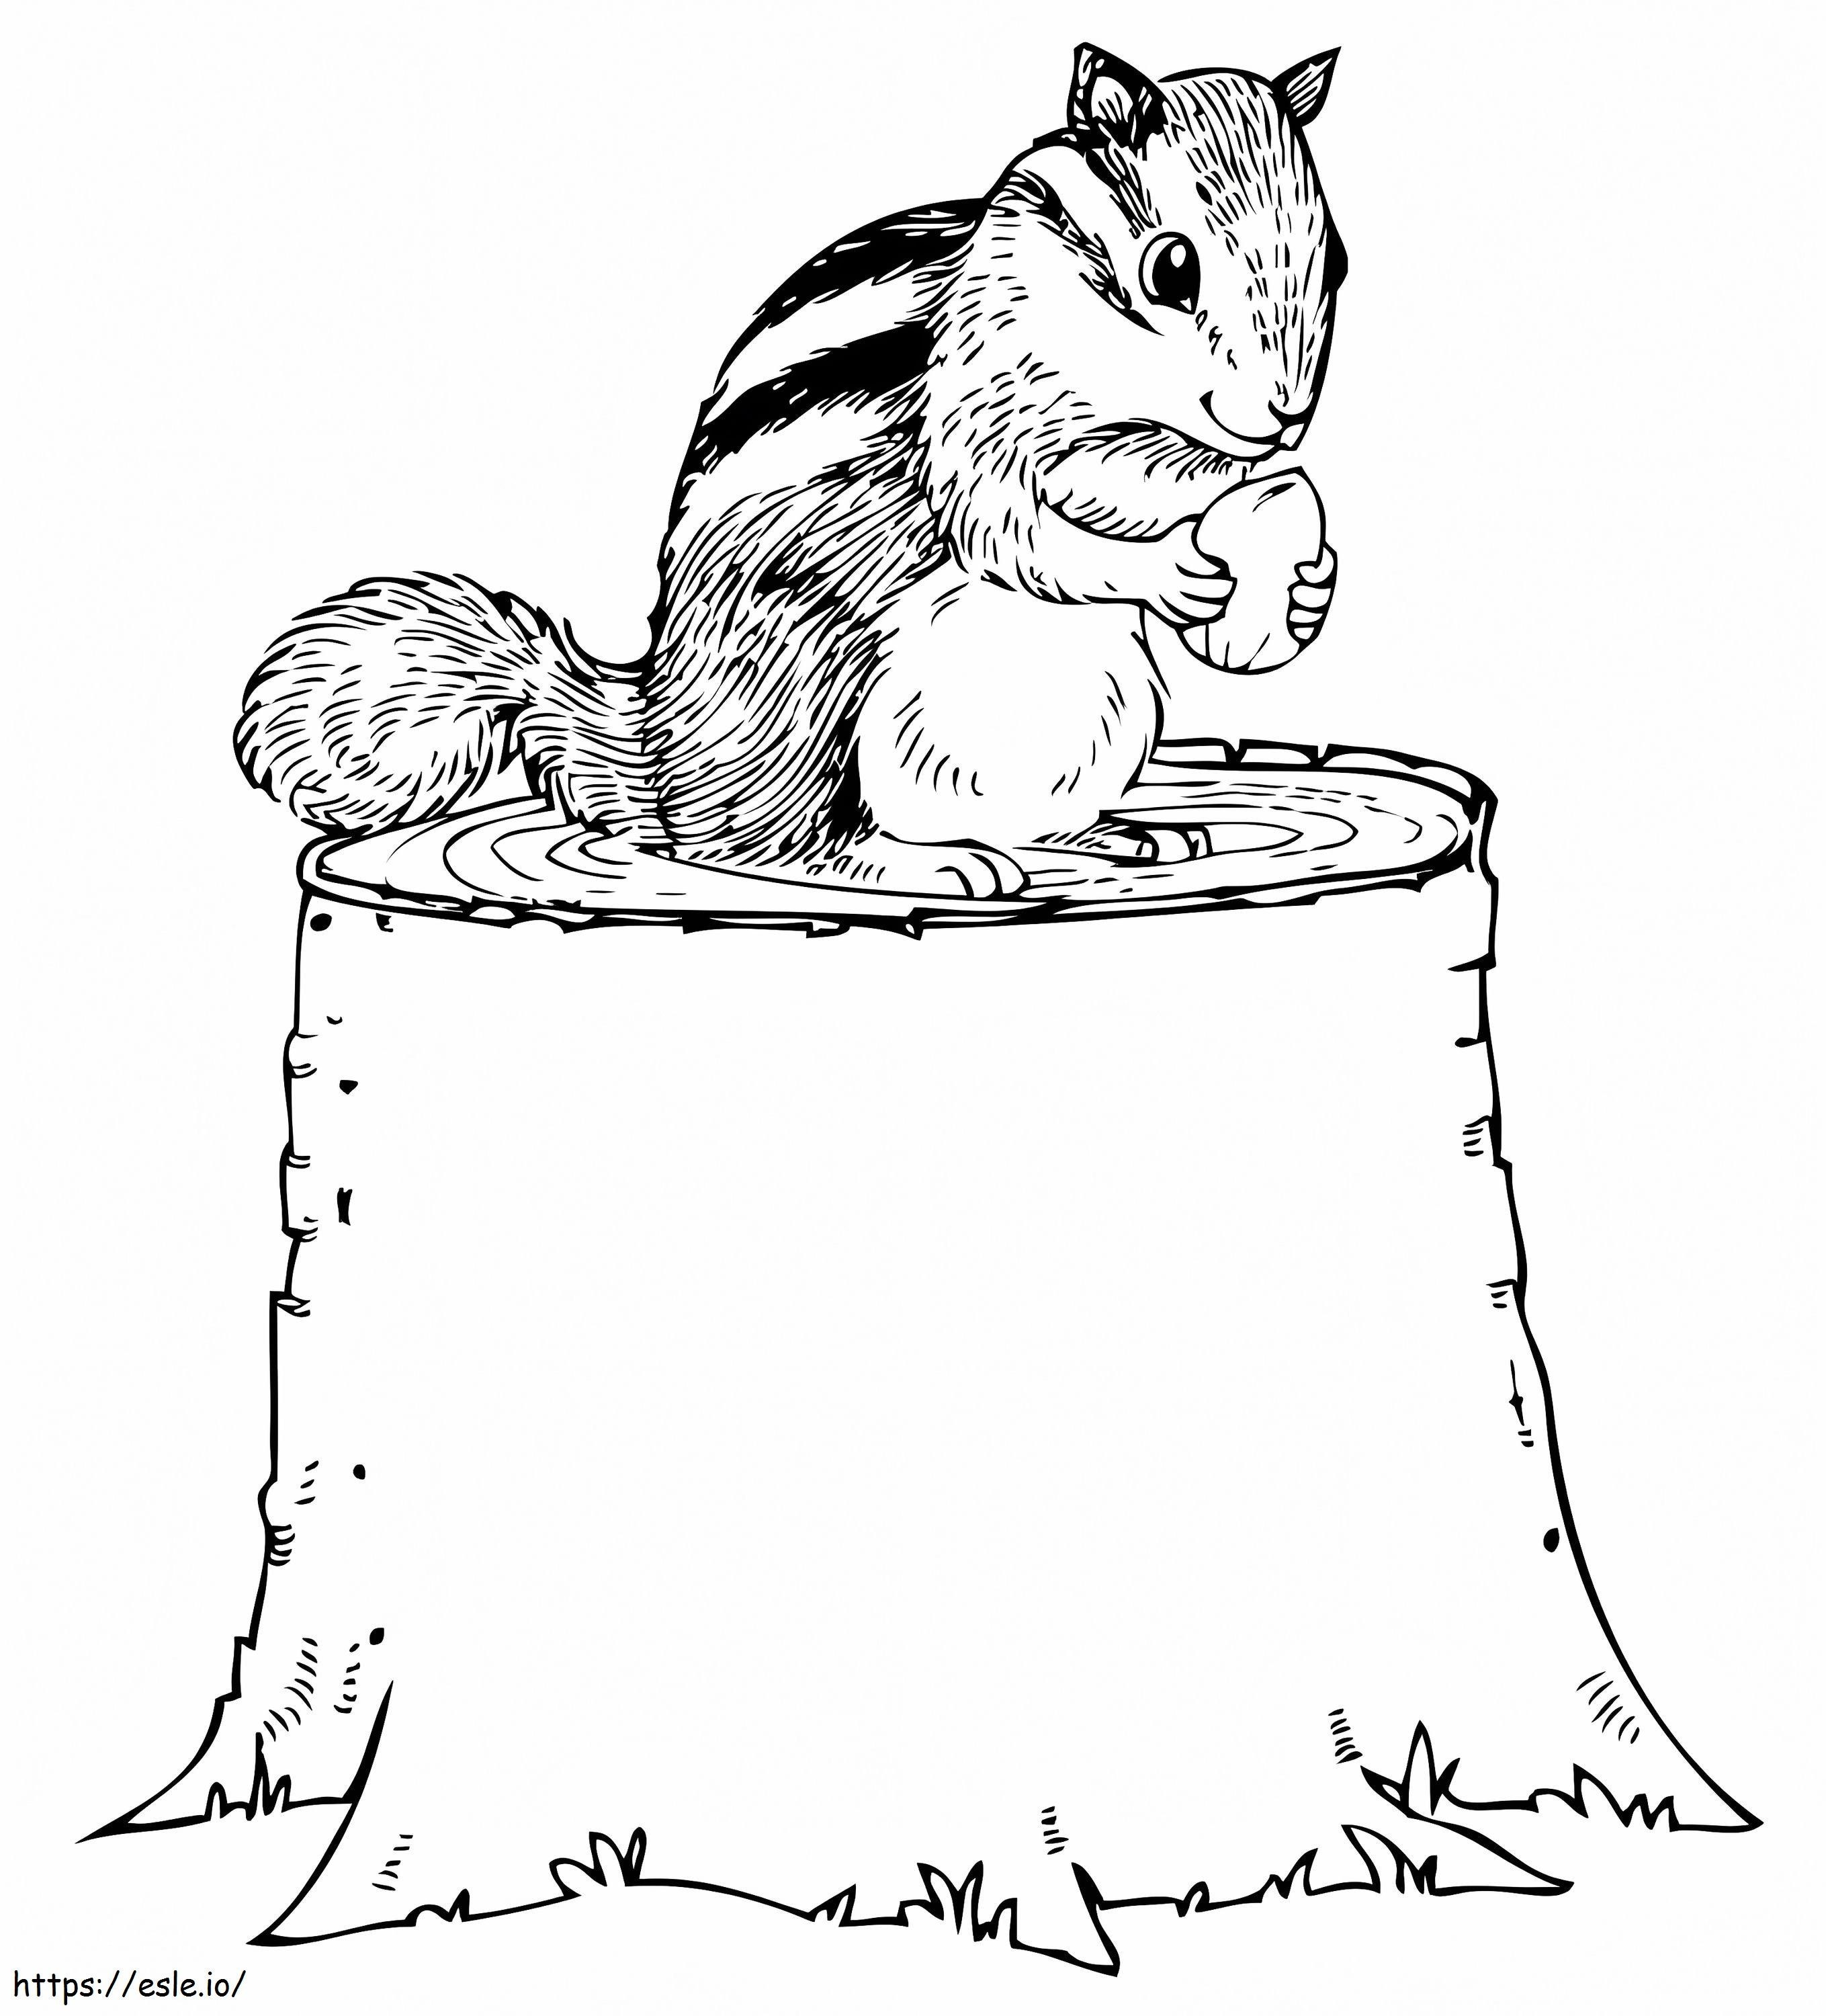 Chipmunk On Tree Stump coloring page